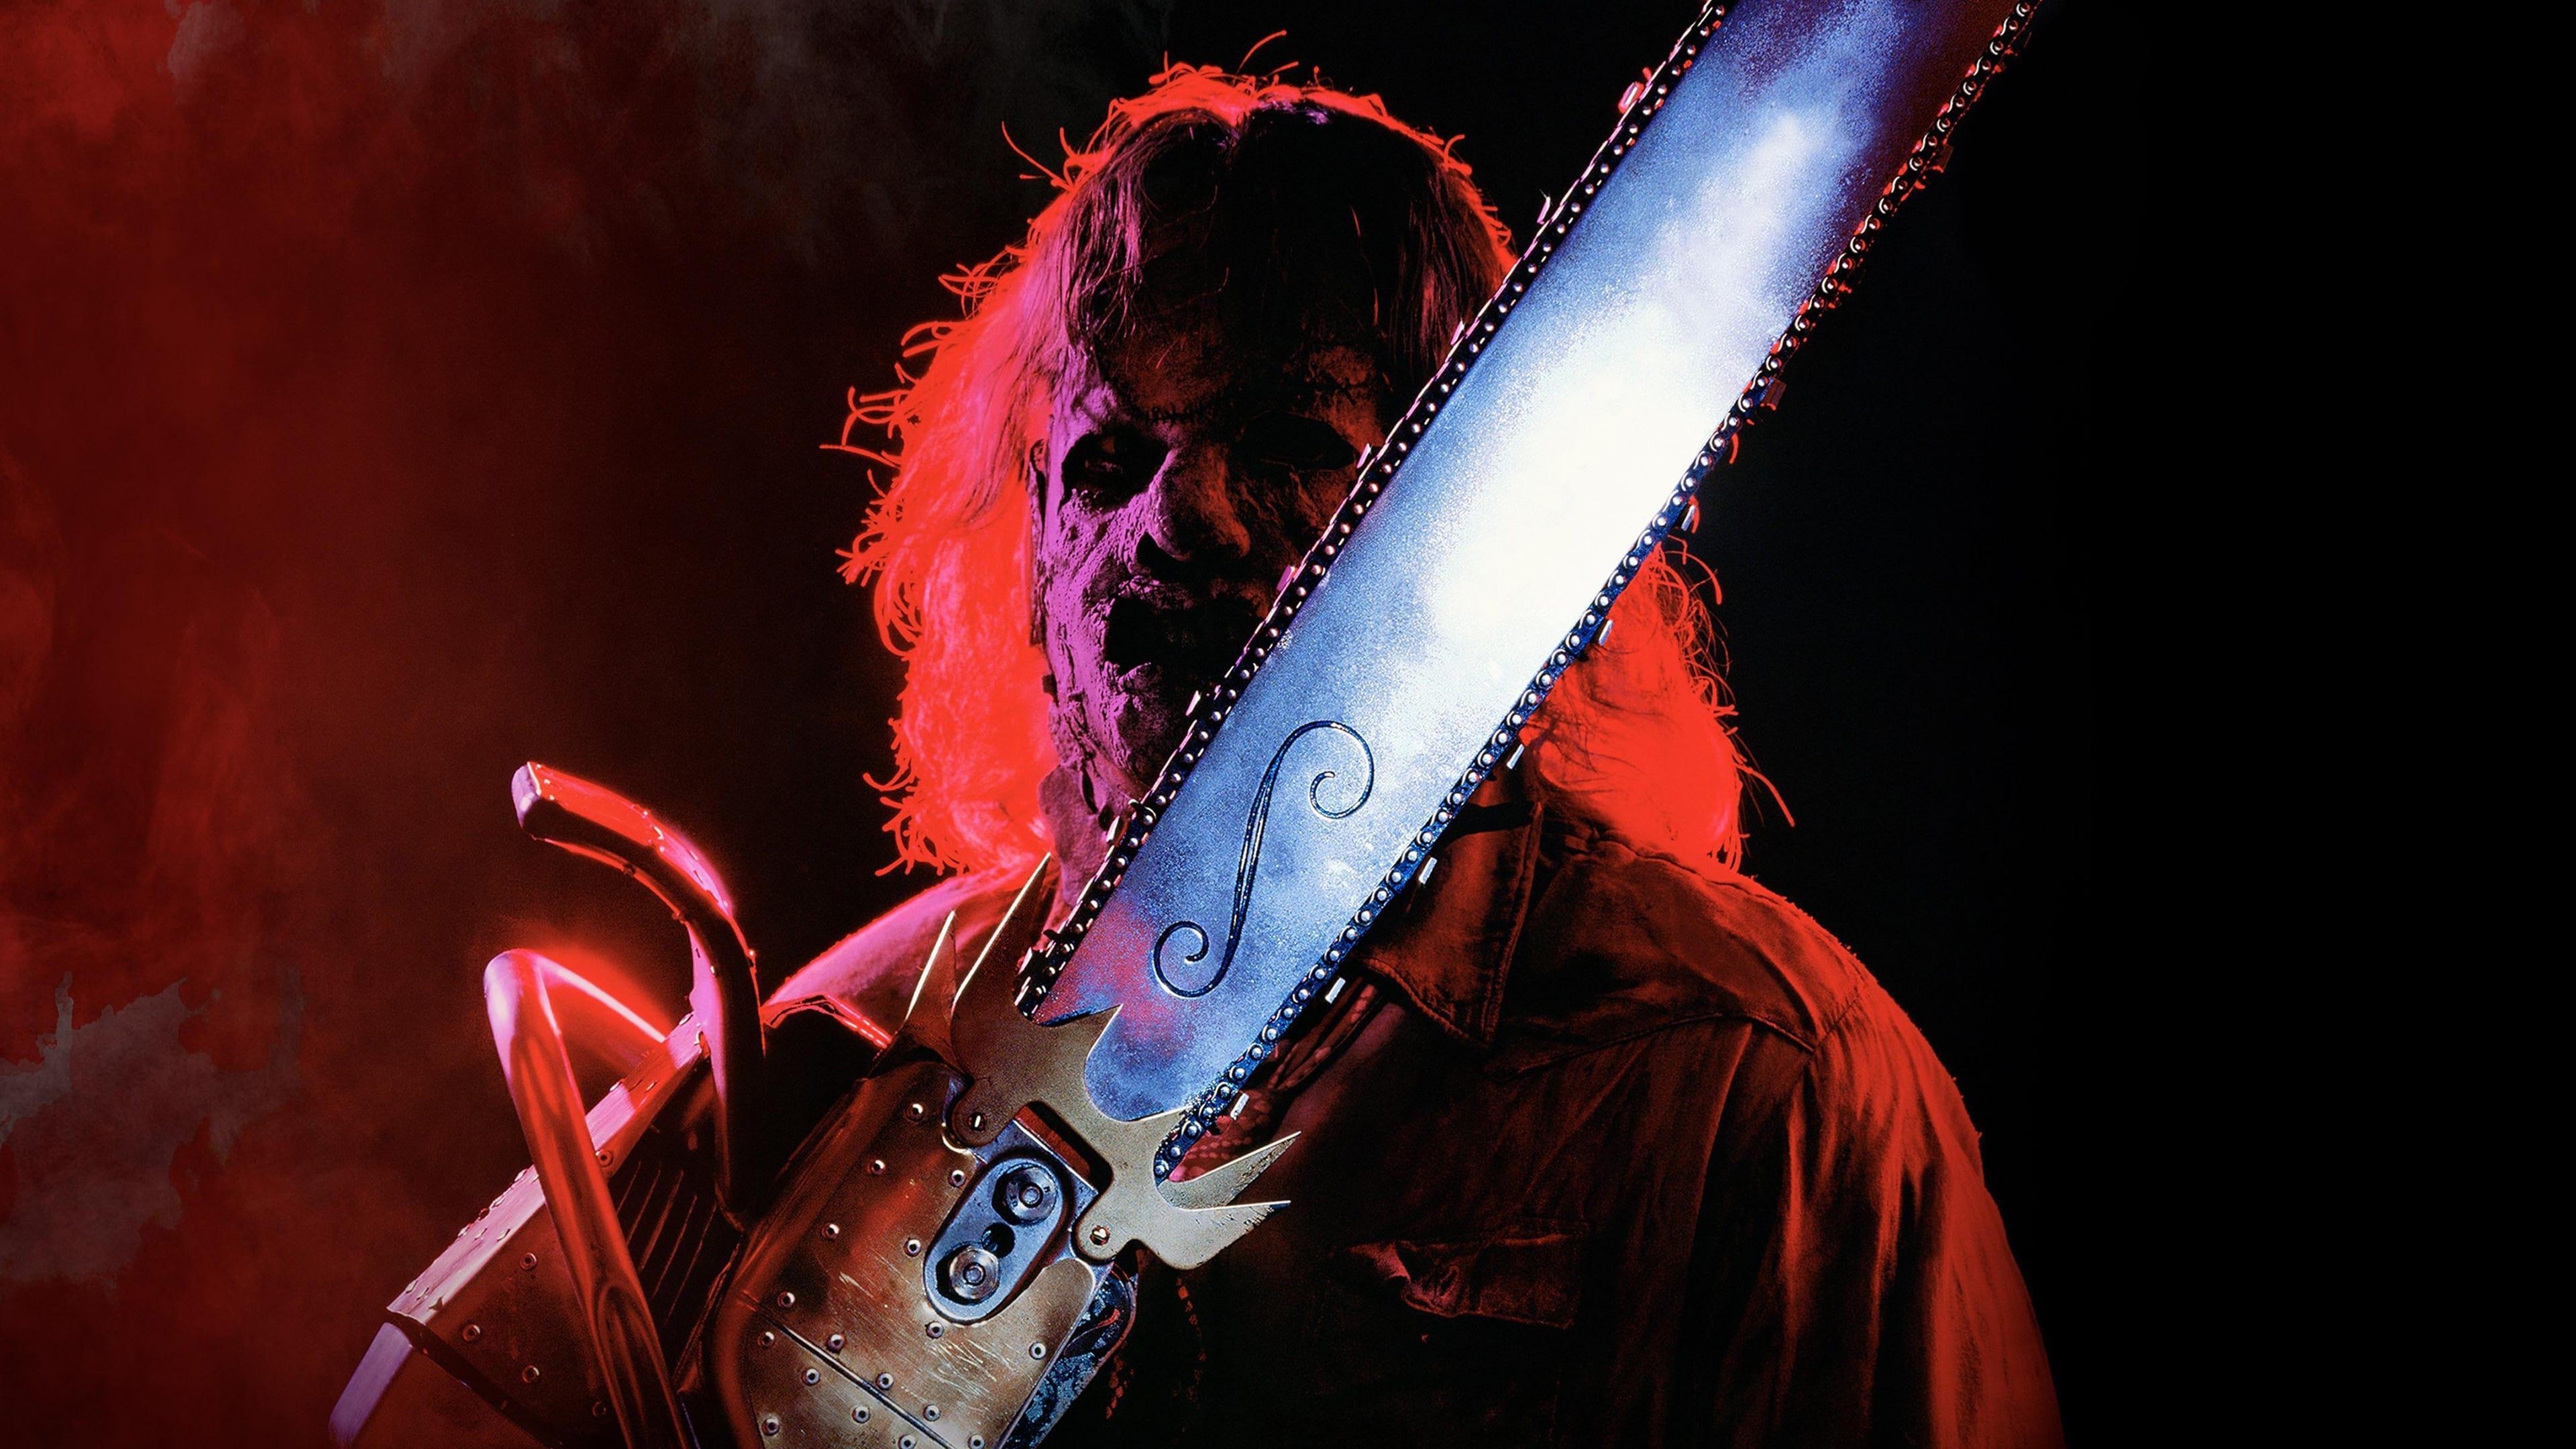 Leatherface: The Texas Chainsaw Massacre III backdrop